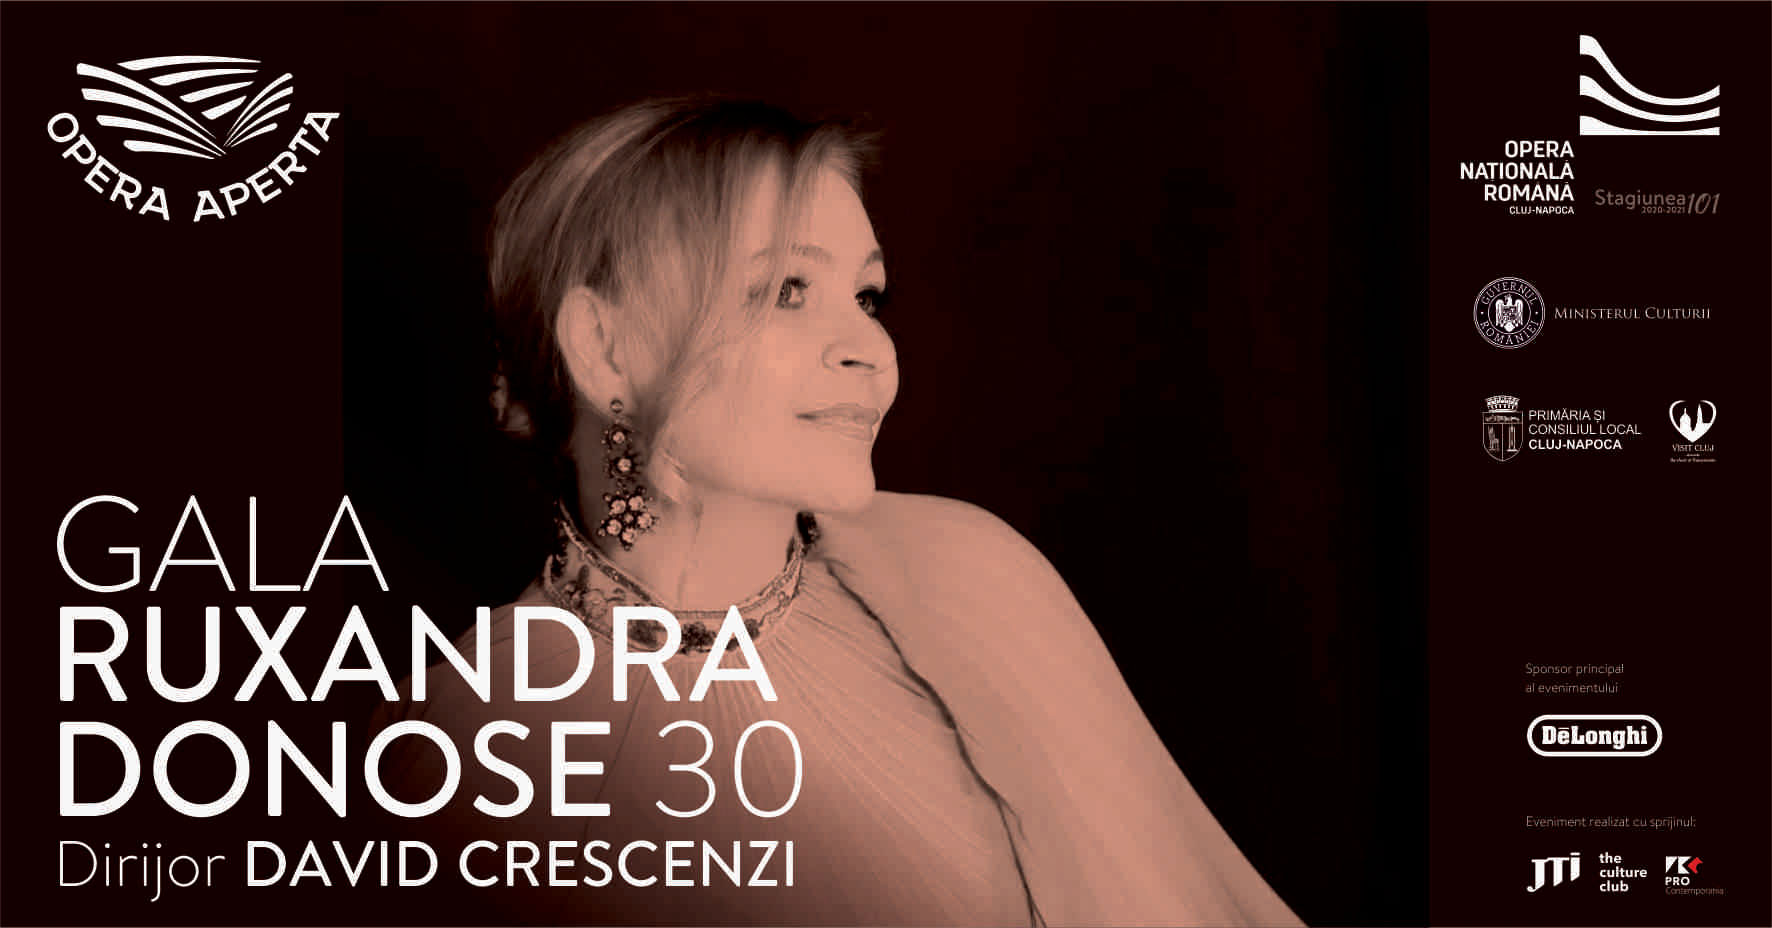 Gala Ruxandra Donose 30 @ Opera Aperta 2021